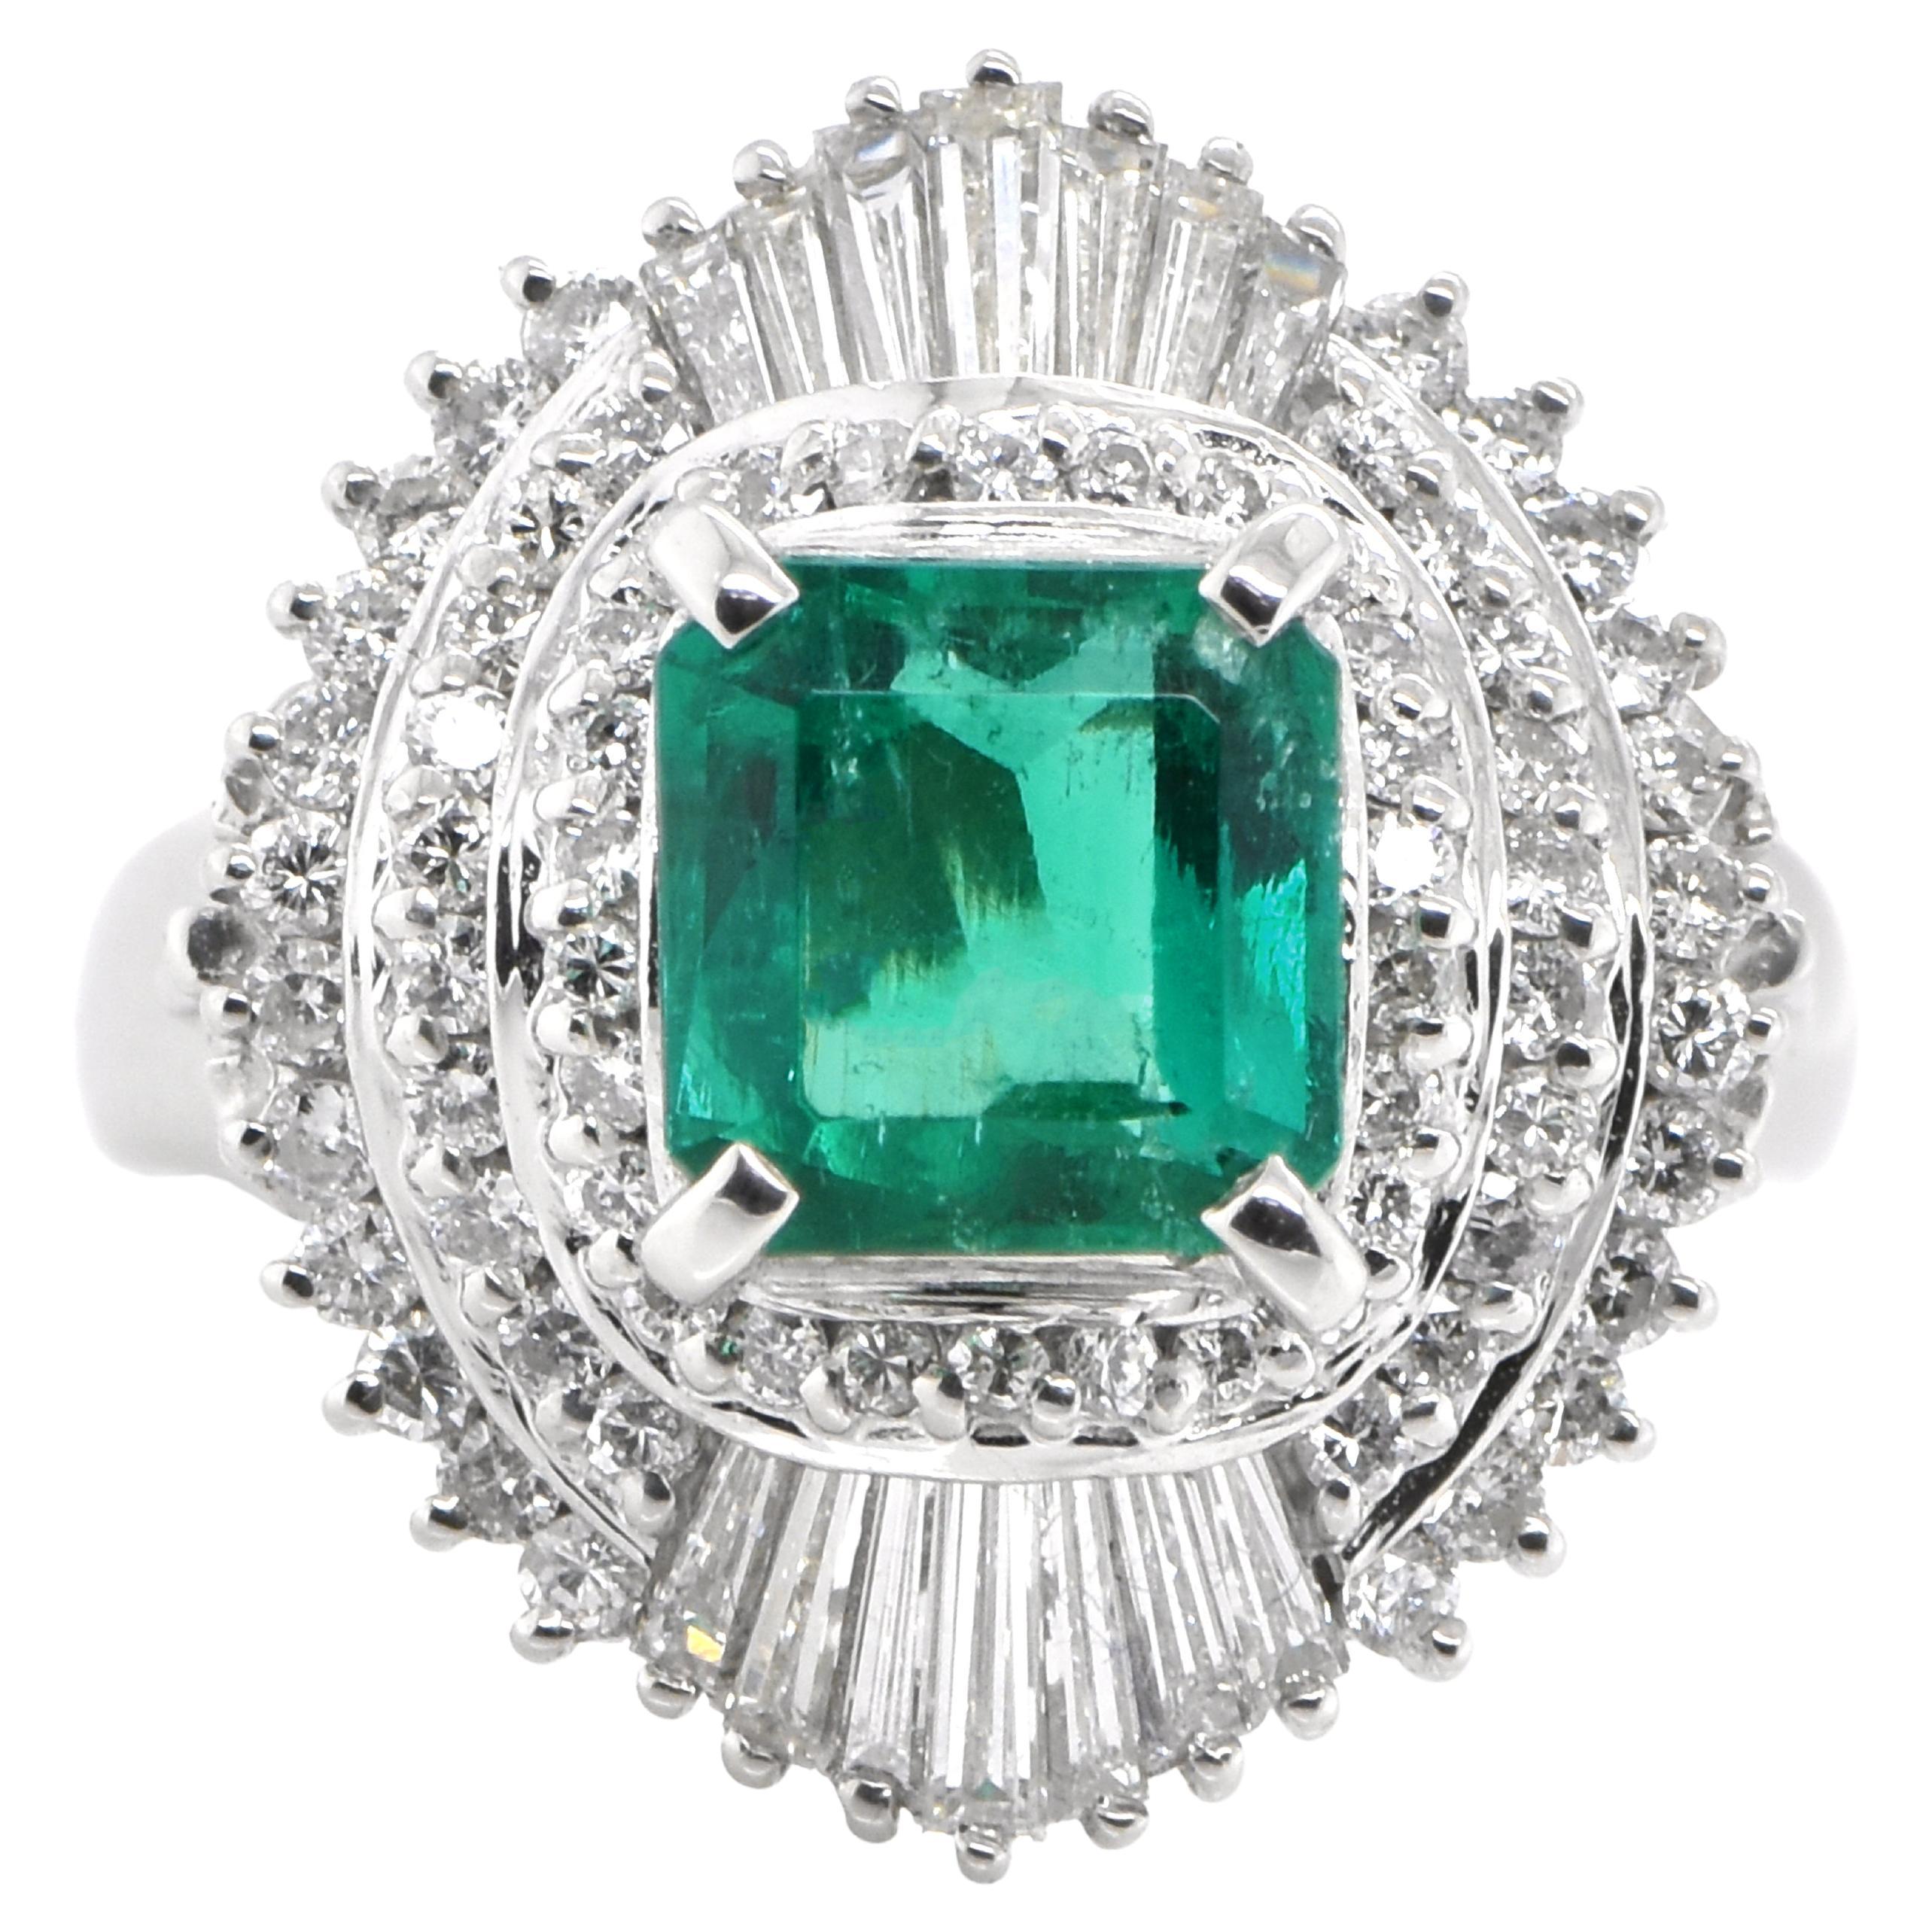  1.60 Carat Natural Emerald and Diamond Ring Set in Platinum